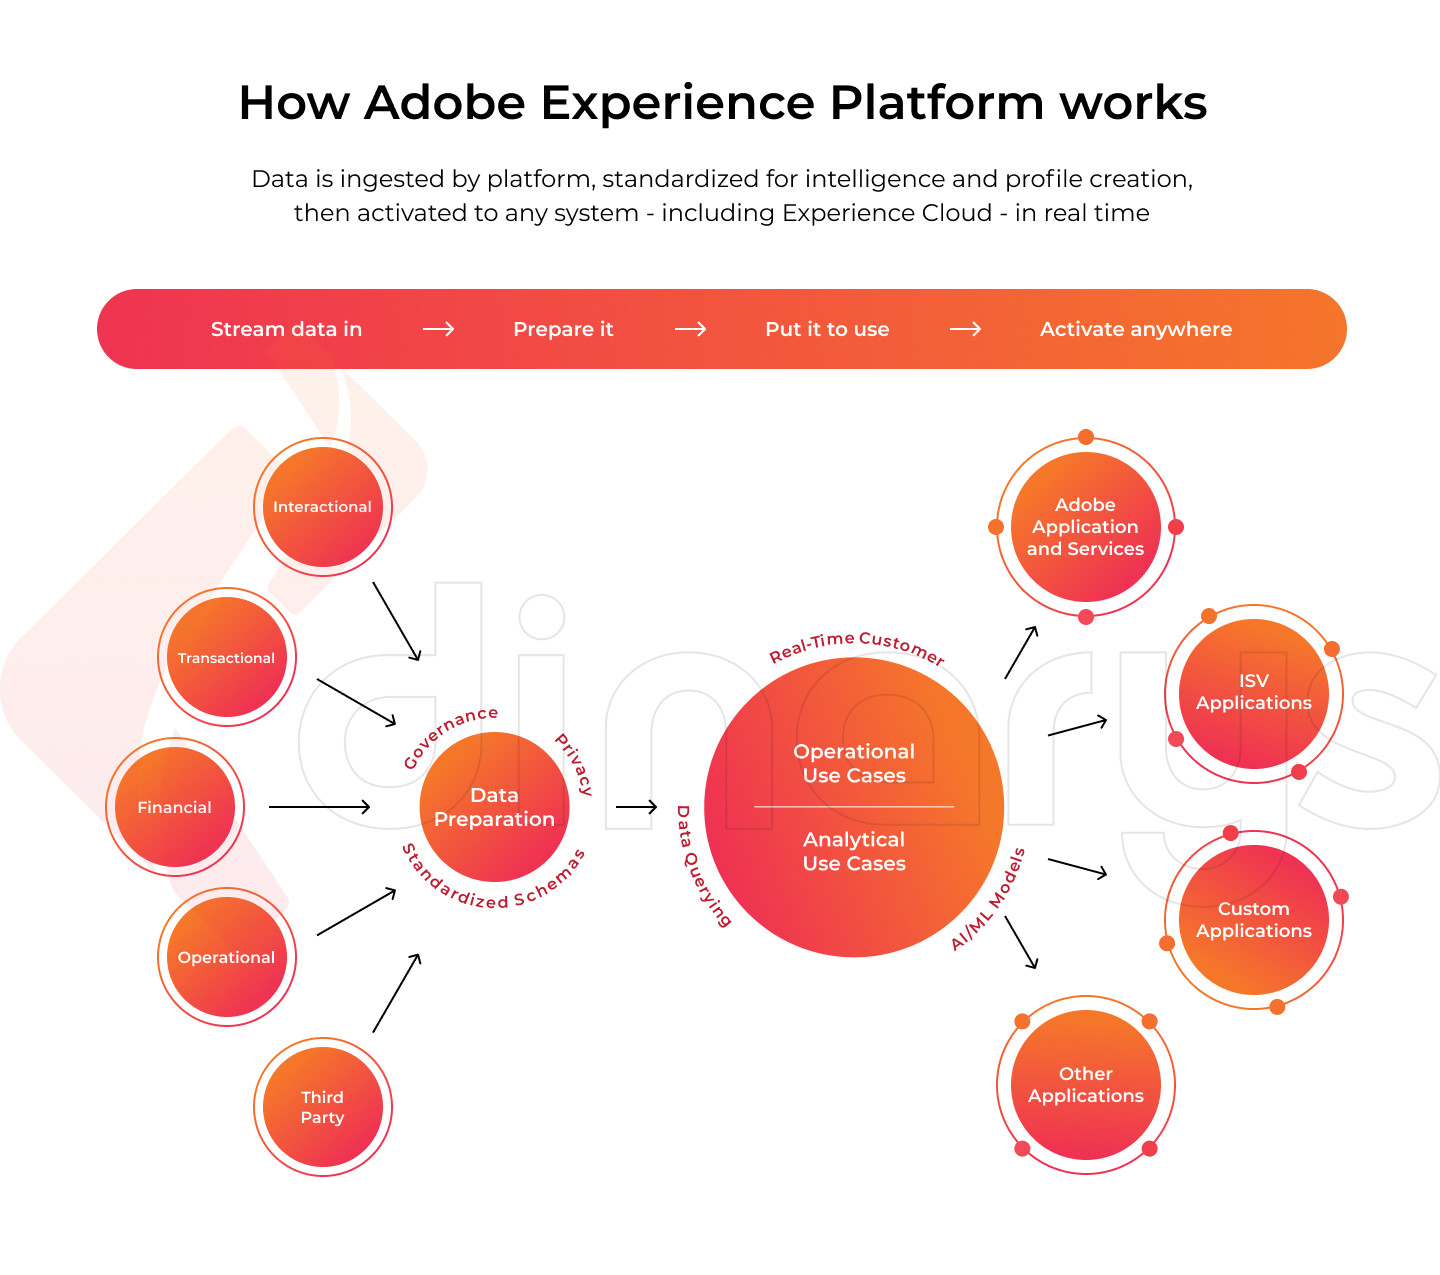 Adobe Experience Platform